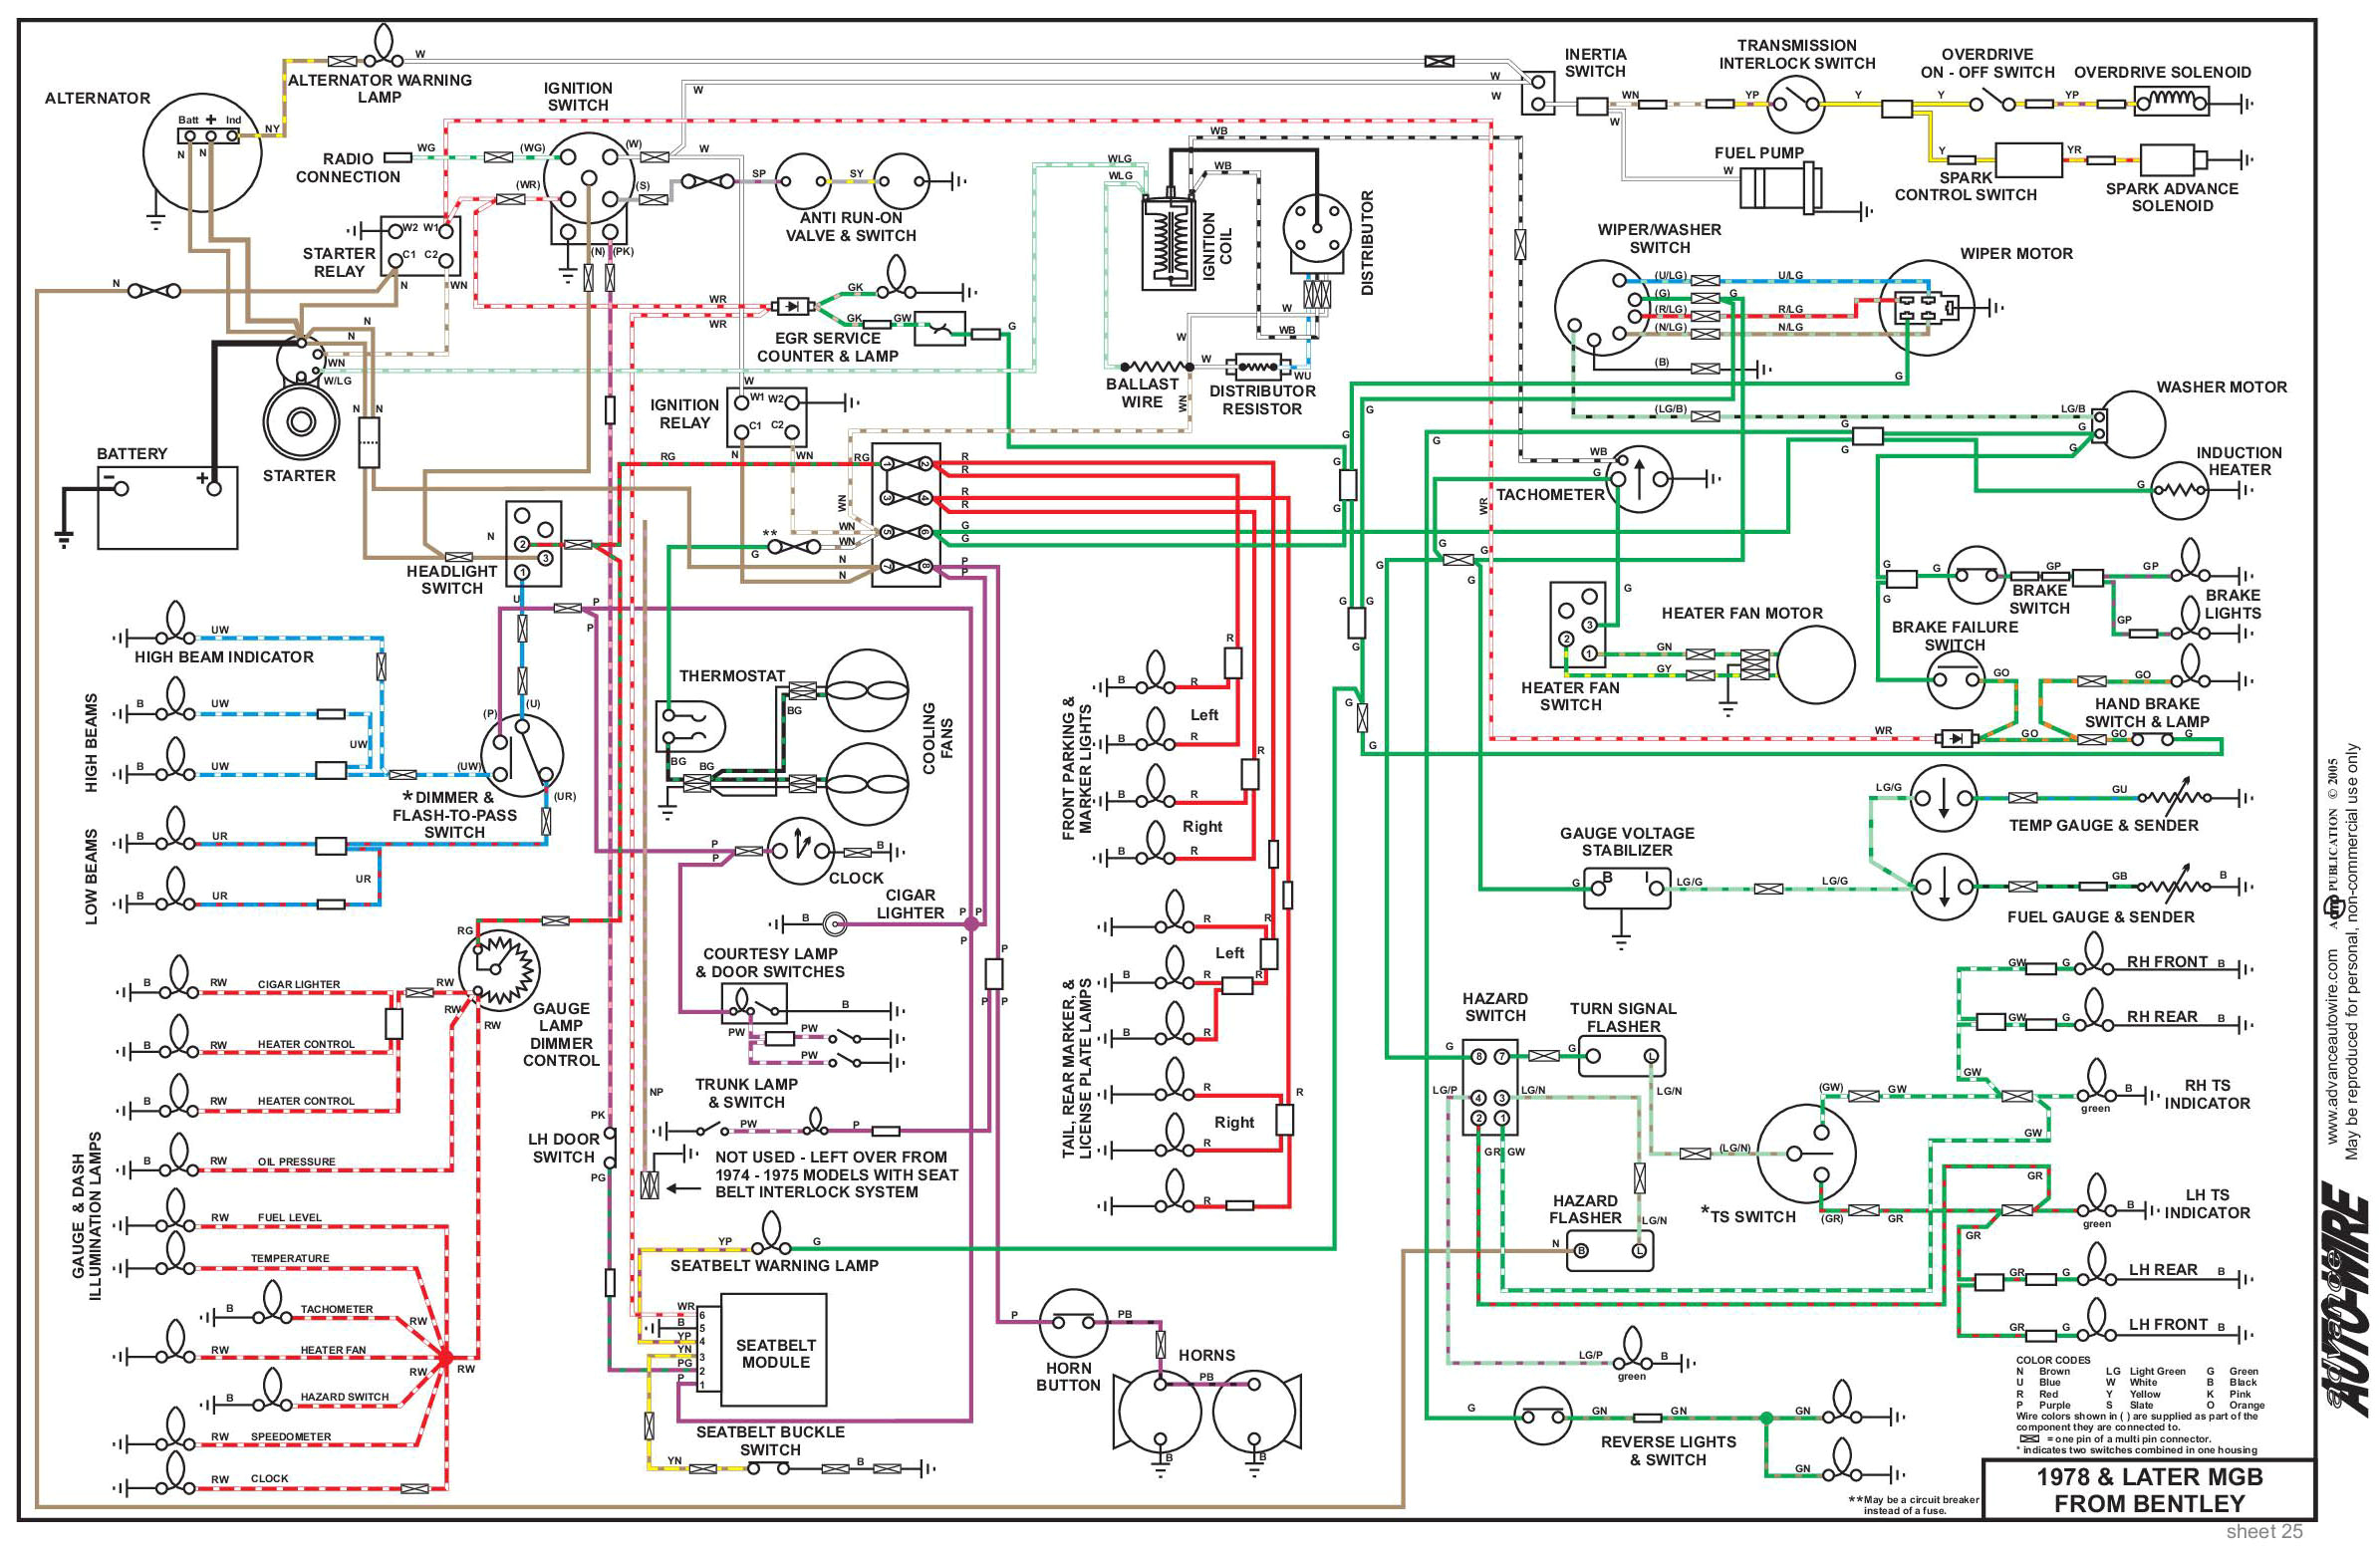 mgb wiring diagrams automotive wiring diagram database mgb wiring diagrams mgb electrical diagrams